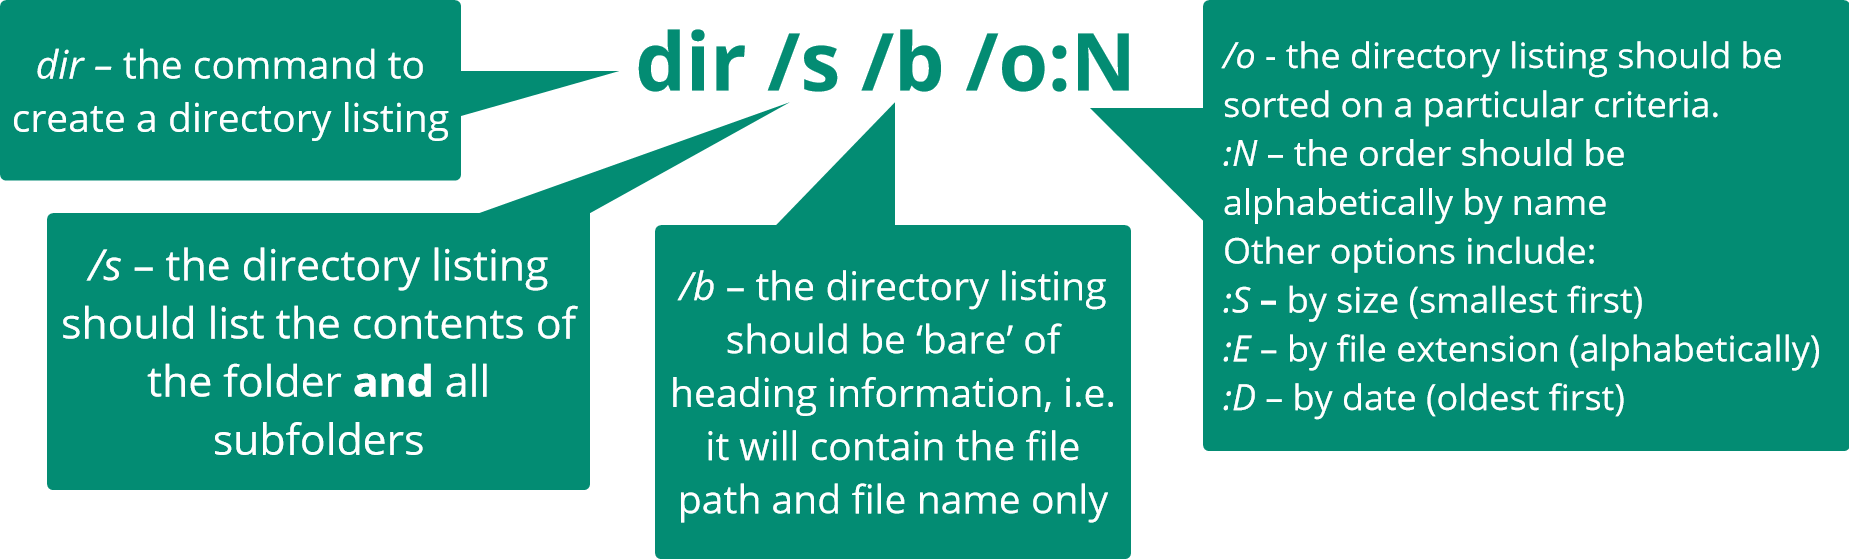 Description of an example dir command: dir /s /b /o:N